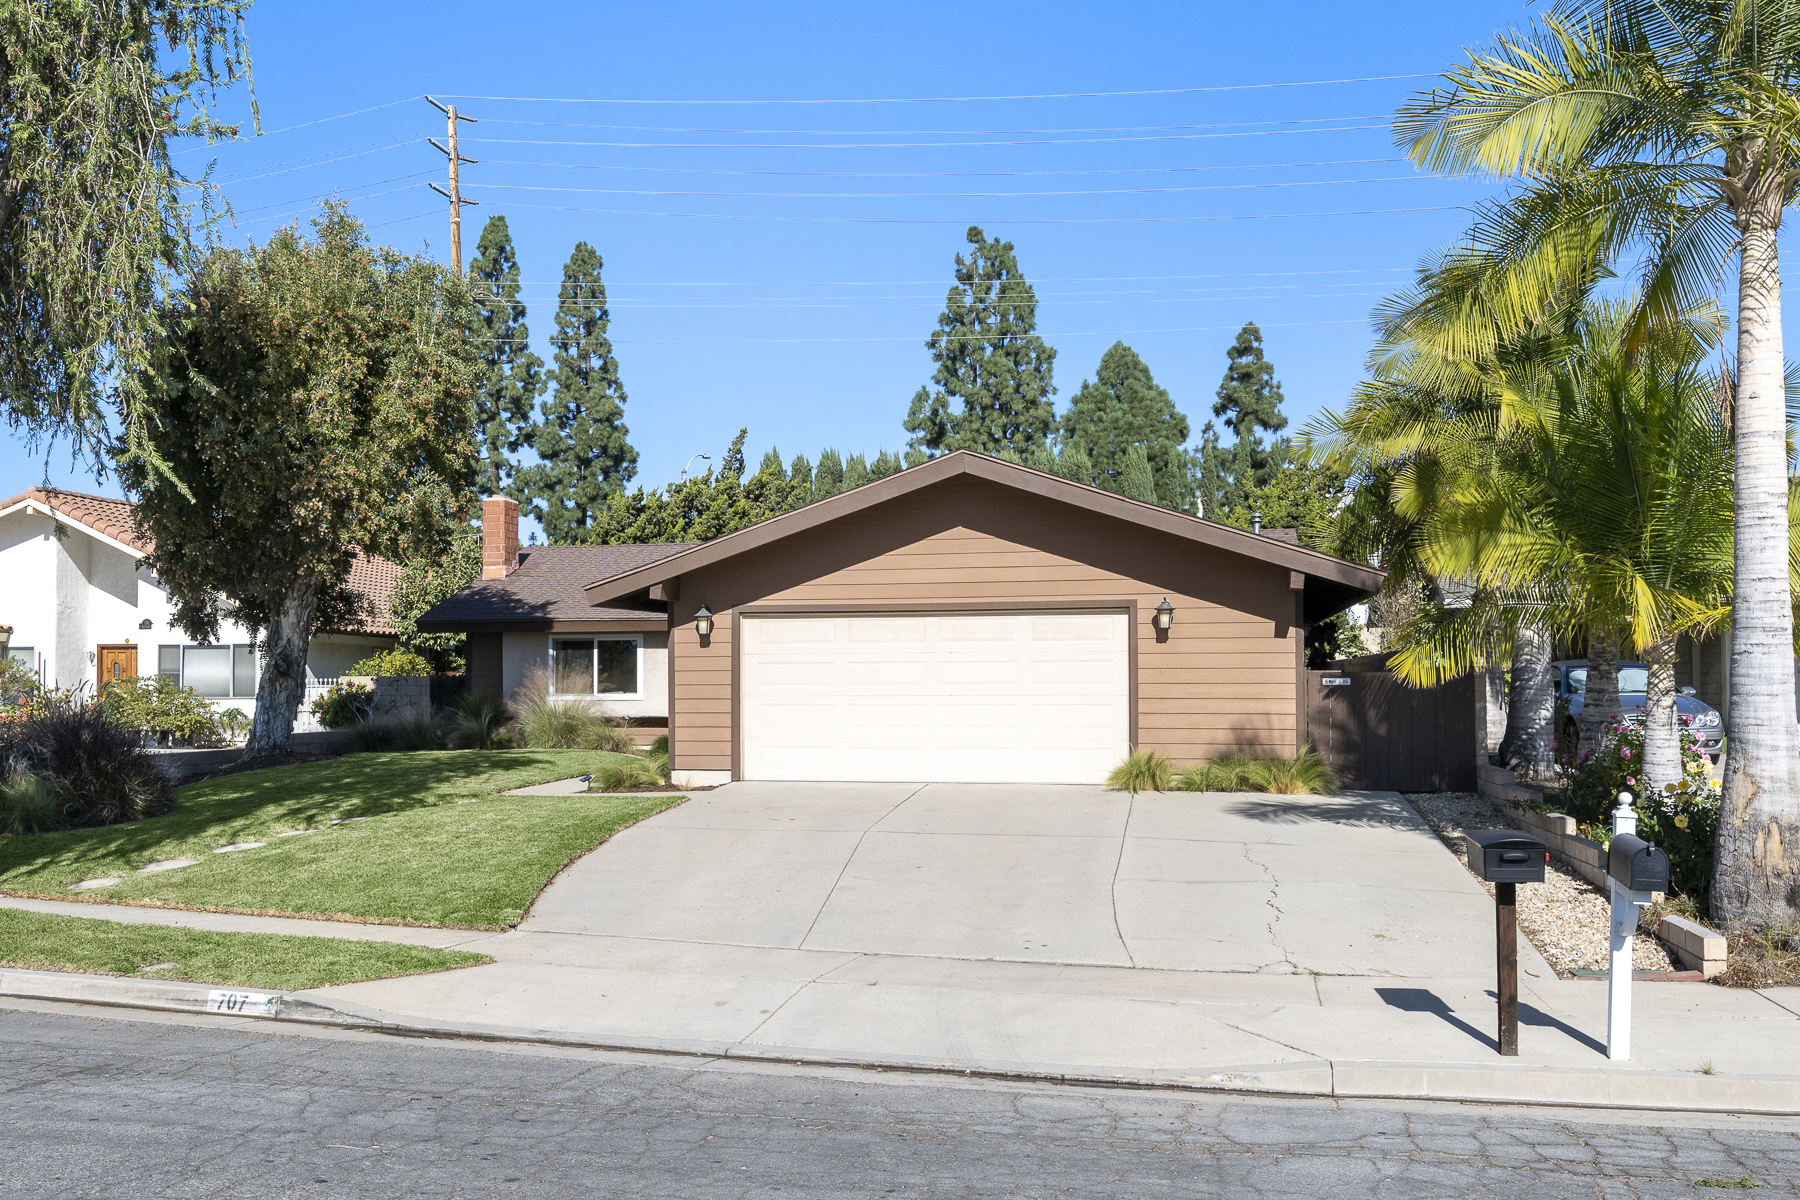 Fullerton Single Level Cul-De-Sac Home – 707 San Ramon Drive, Fullerton, CA 92835 - House Front Garage - Street View